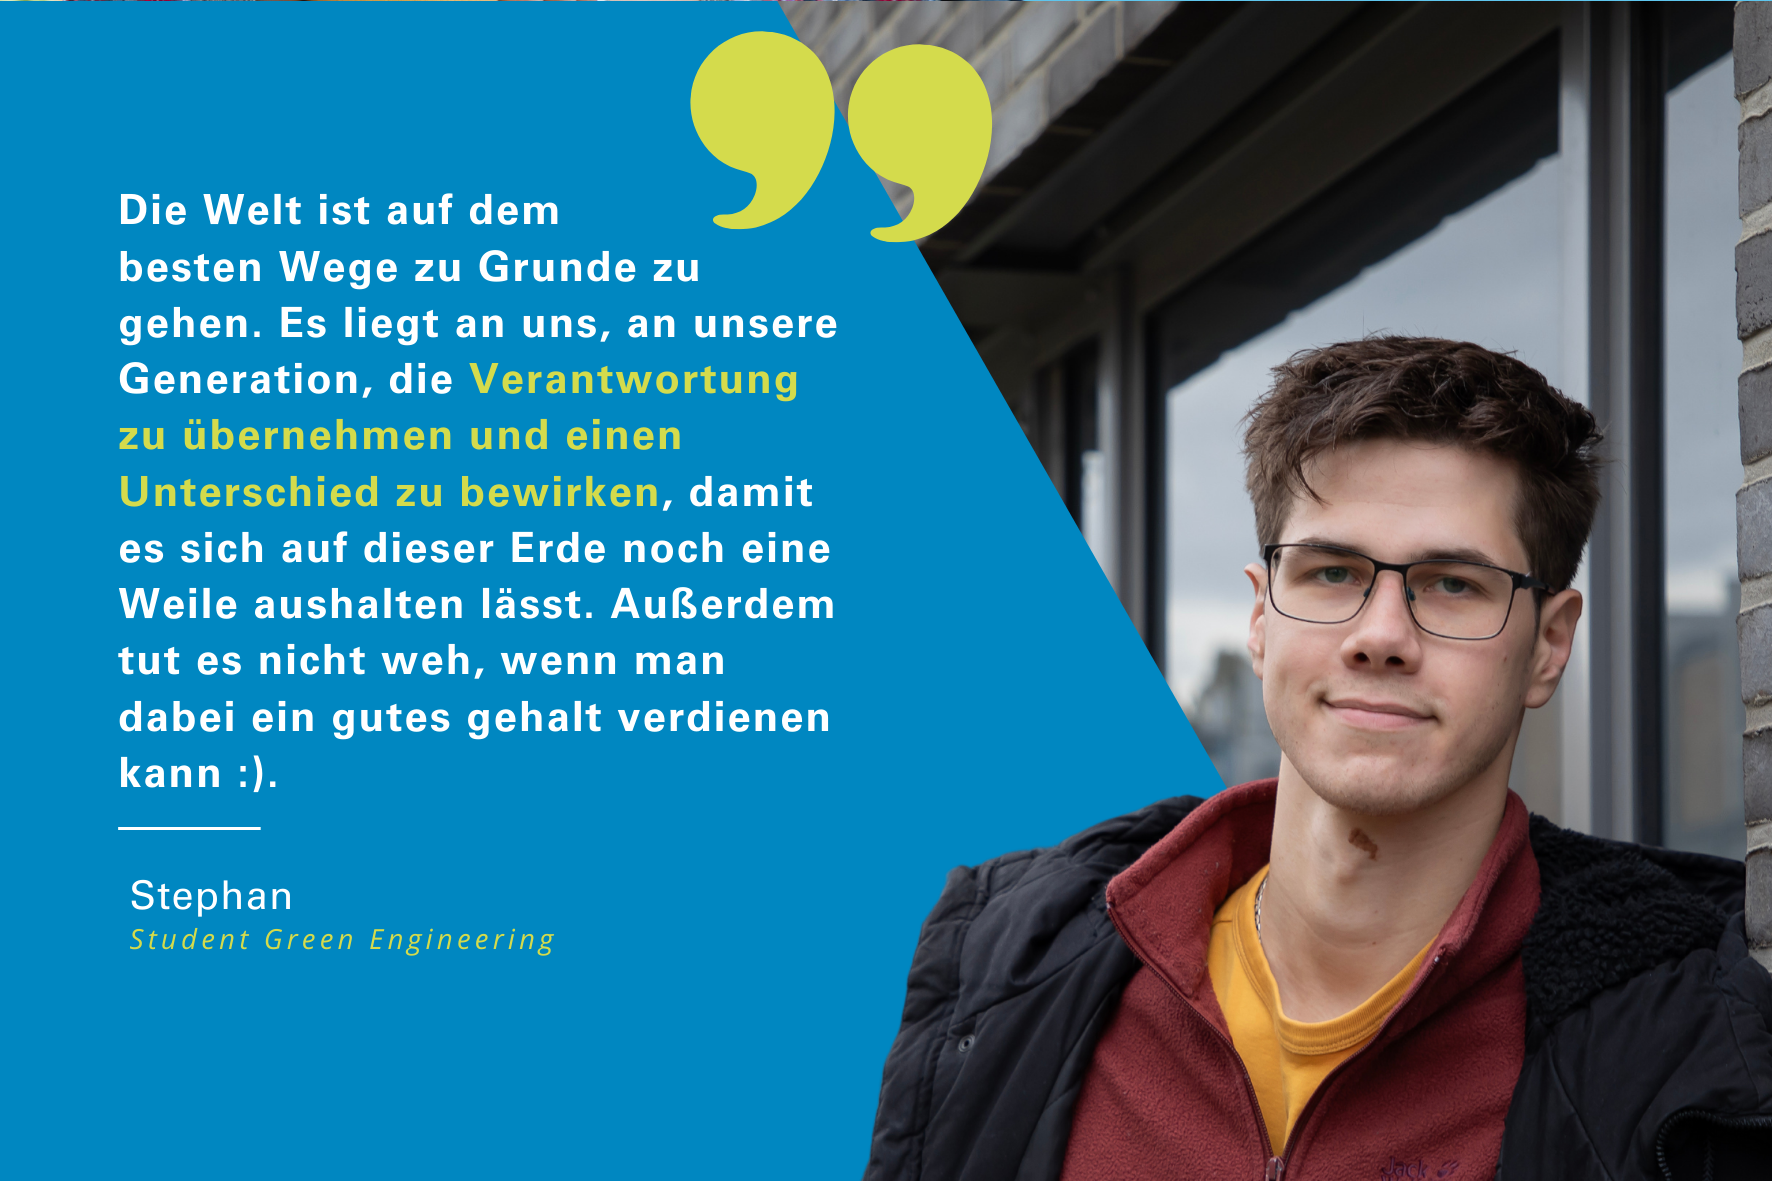 Stephan studiert Green Engineering an der Fakultät Versorgungstechnik